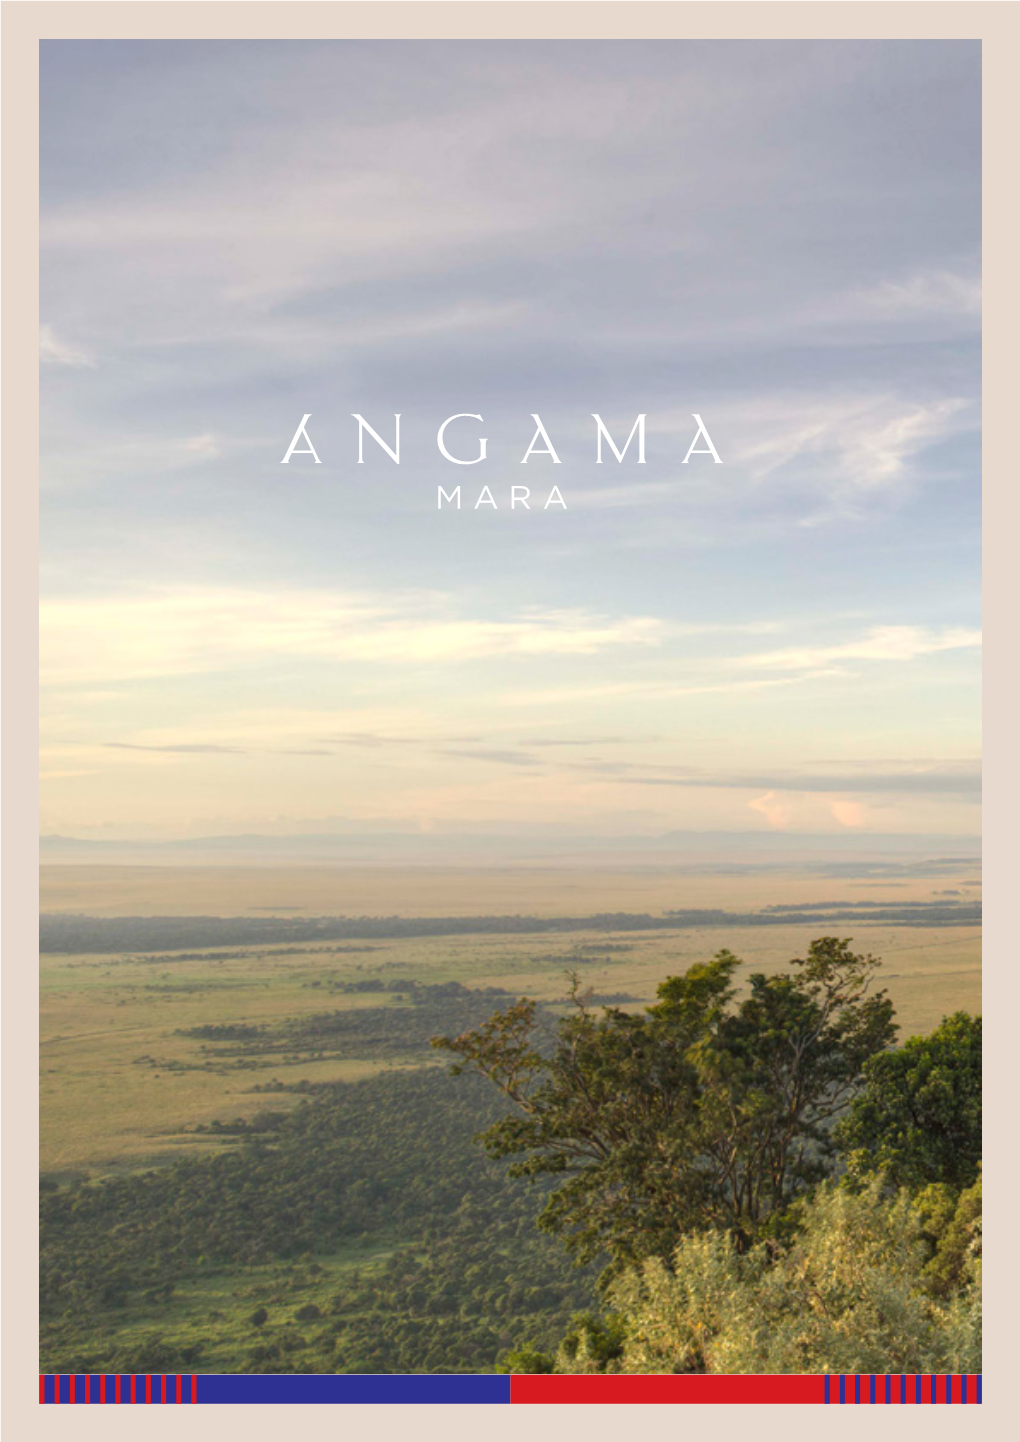 The Angama Foundation's